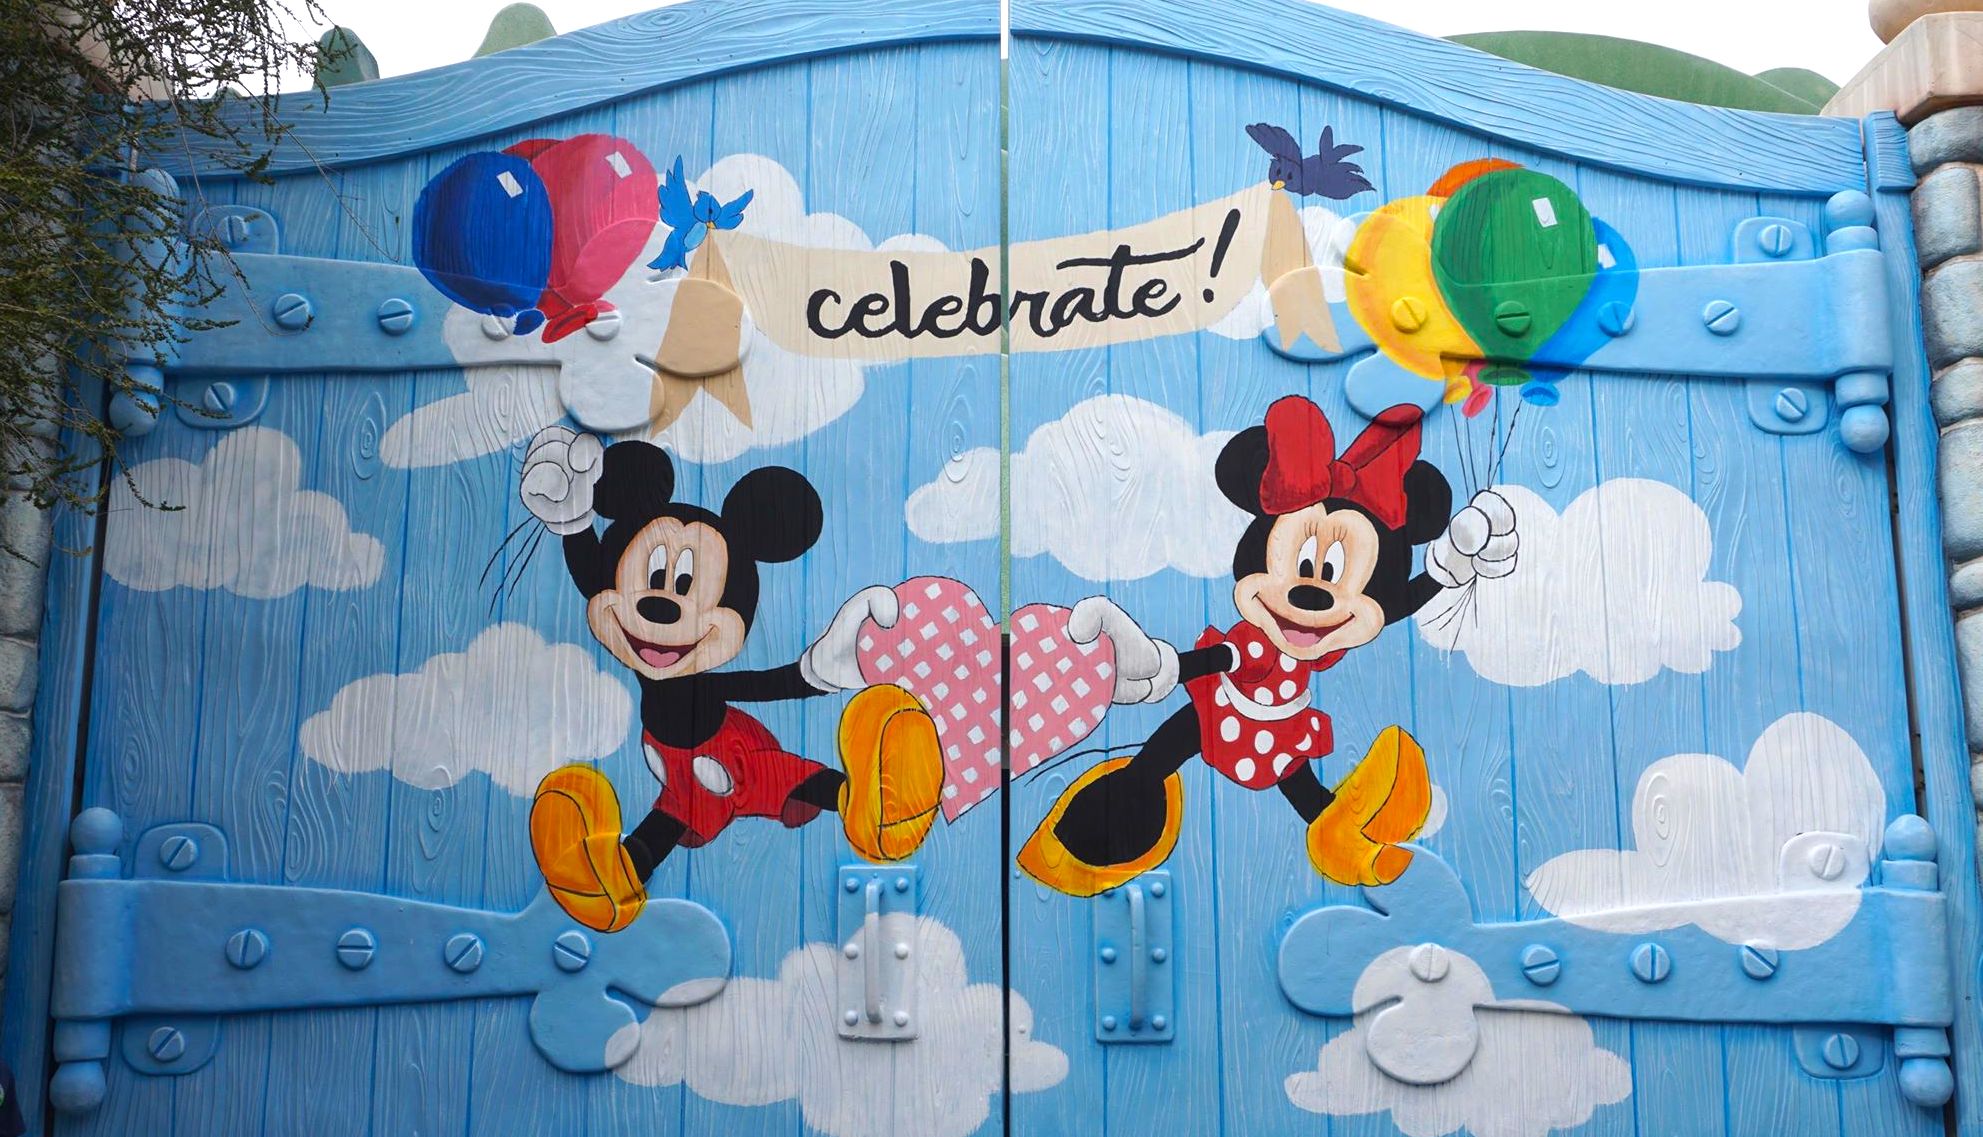 Disneyland Celebrates Mickey and Minnie with Fun New Photo Wall